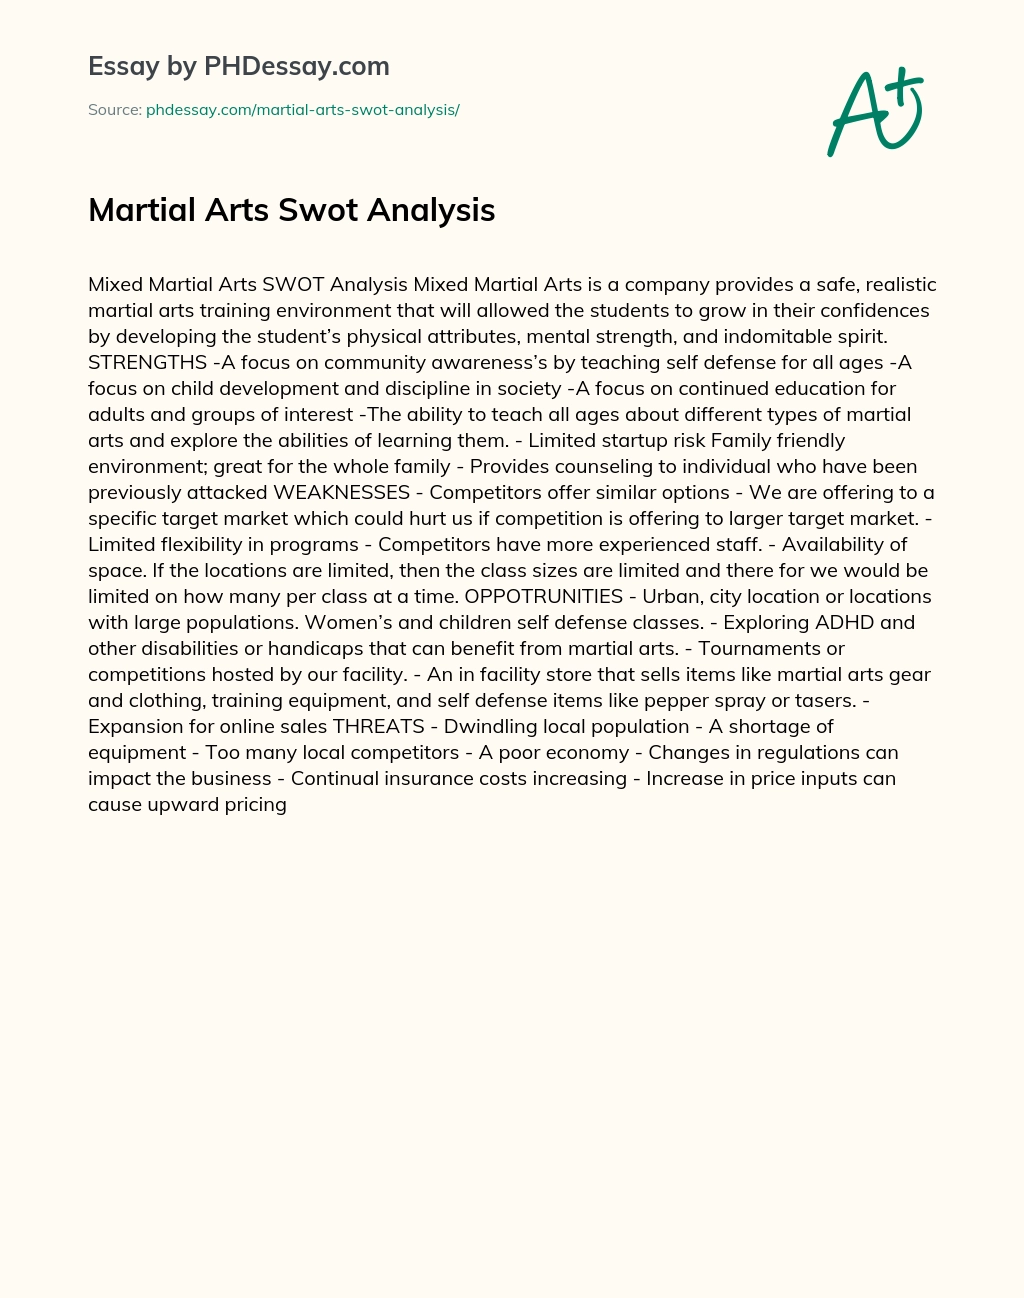 Martial Arts Swot Analysis essay